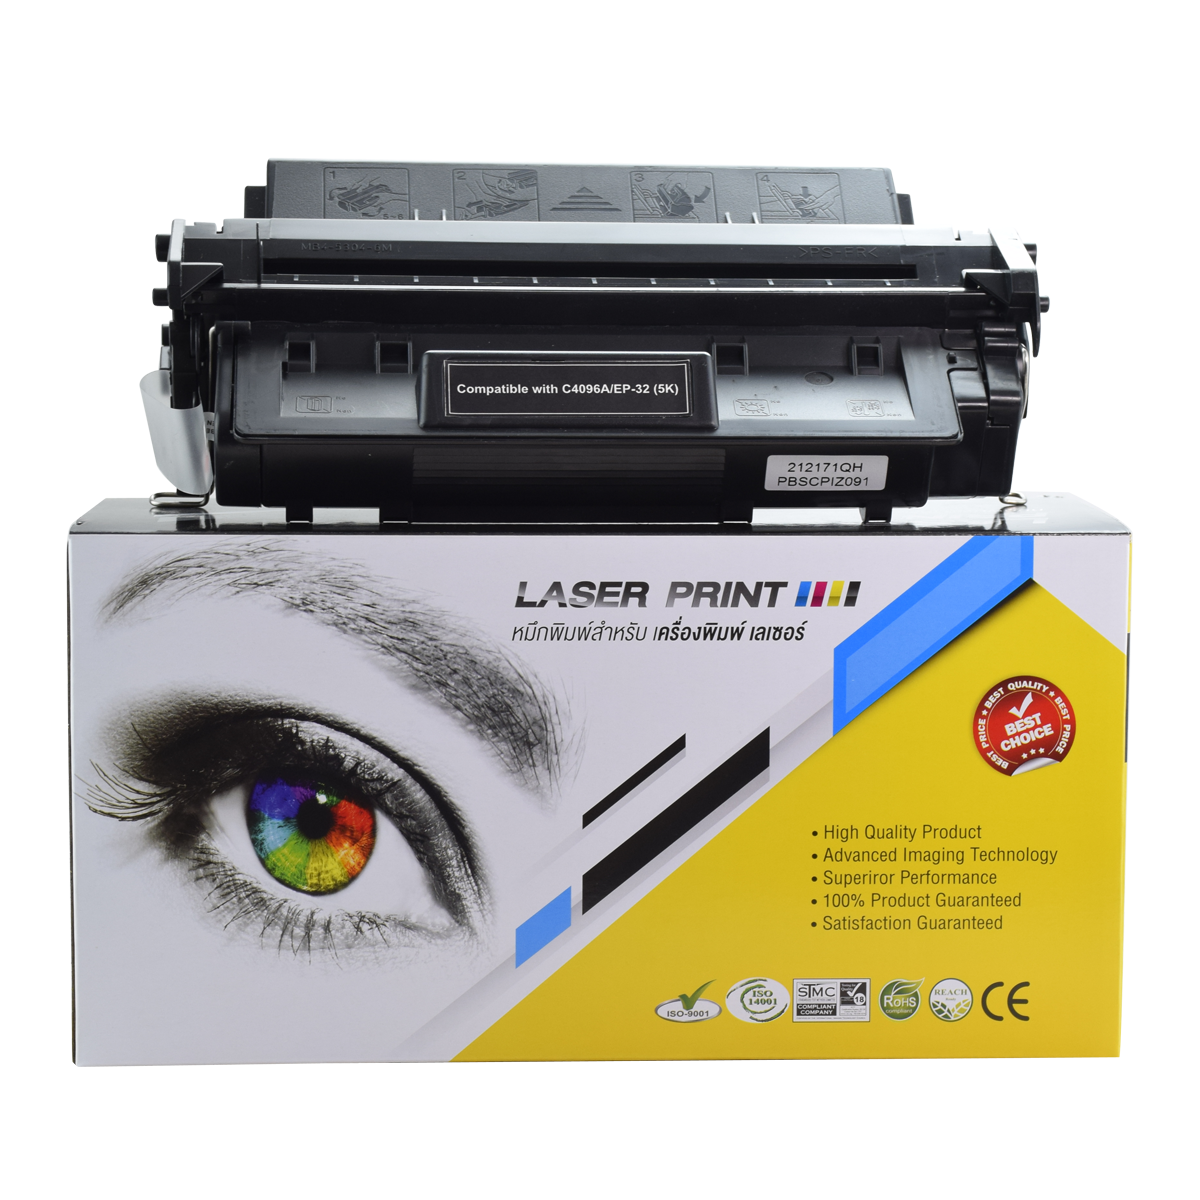 HP C4096A / EP-32 (5K) Laserprint Black